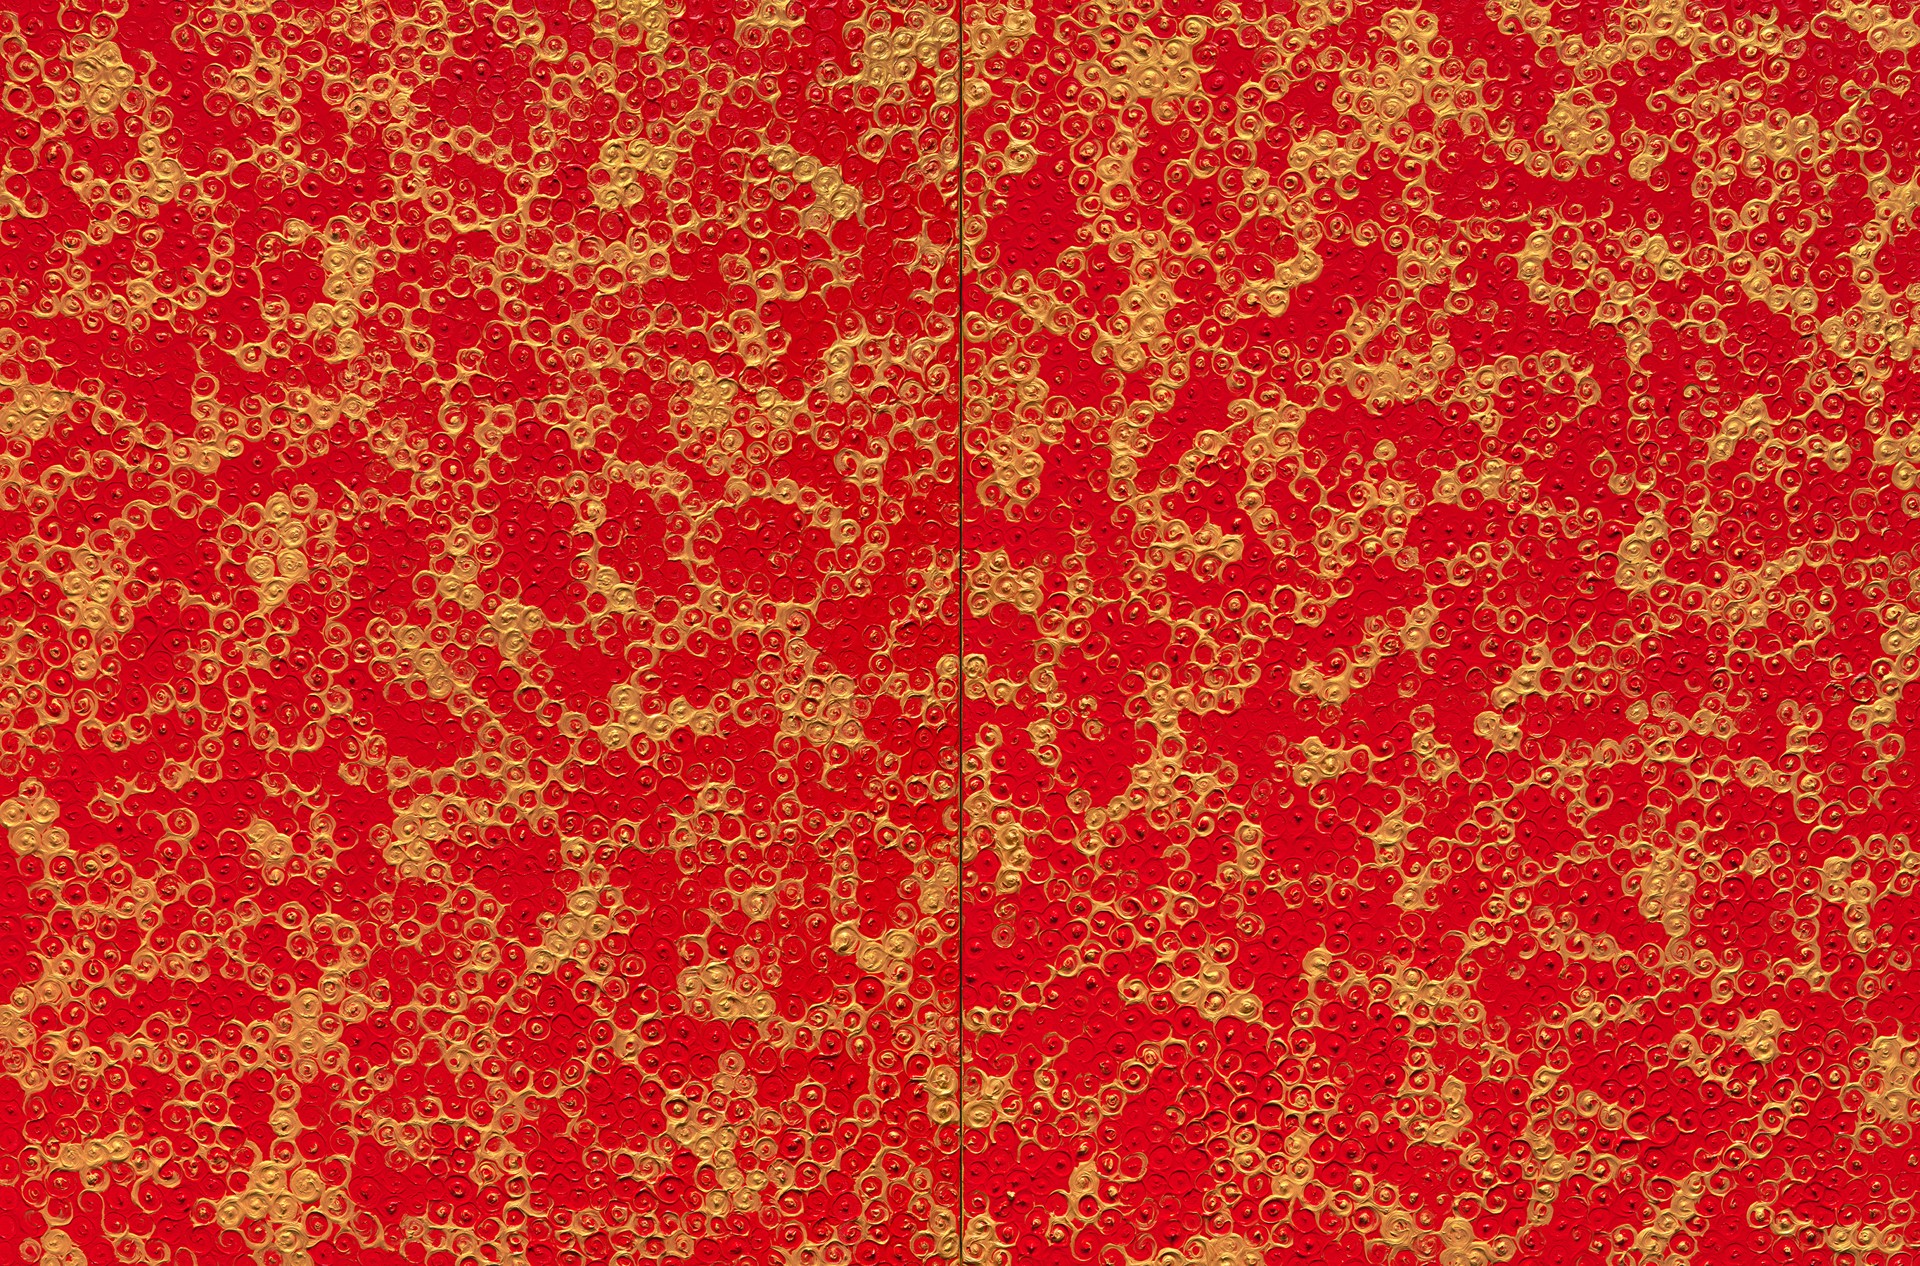 Brocades-Red Gold (diptych) by Uma Rani Iyli